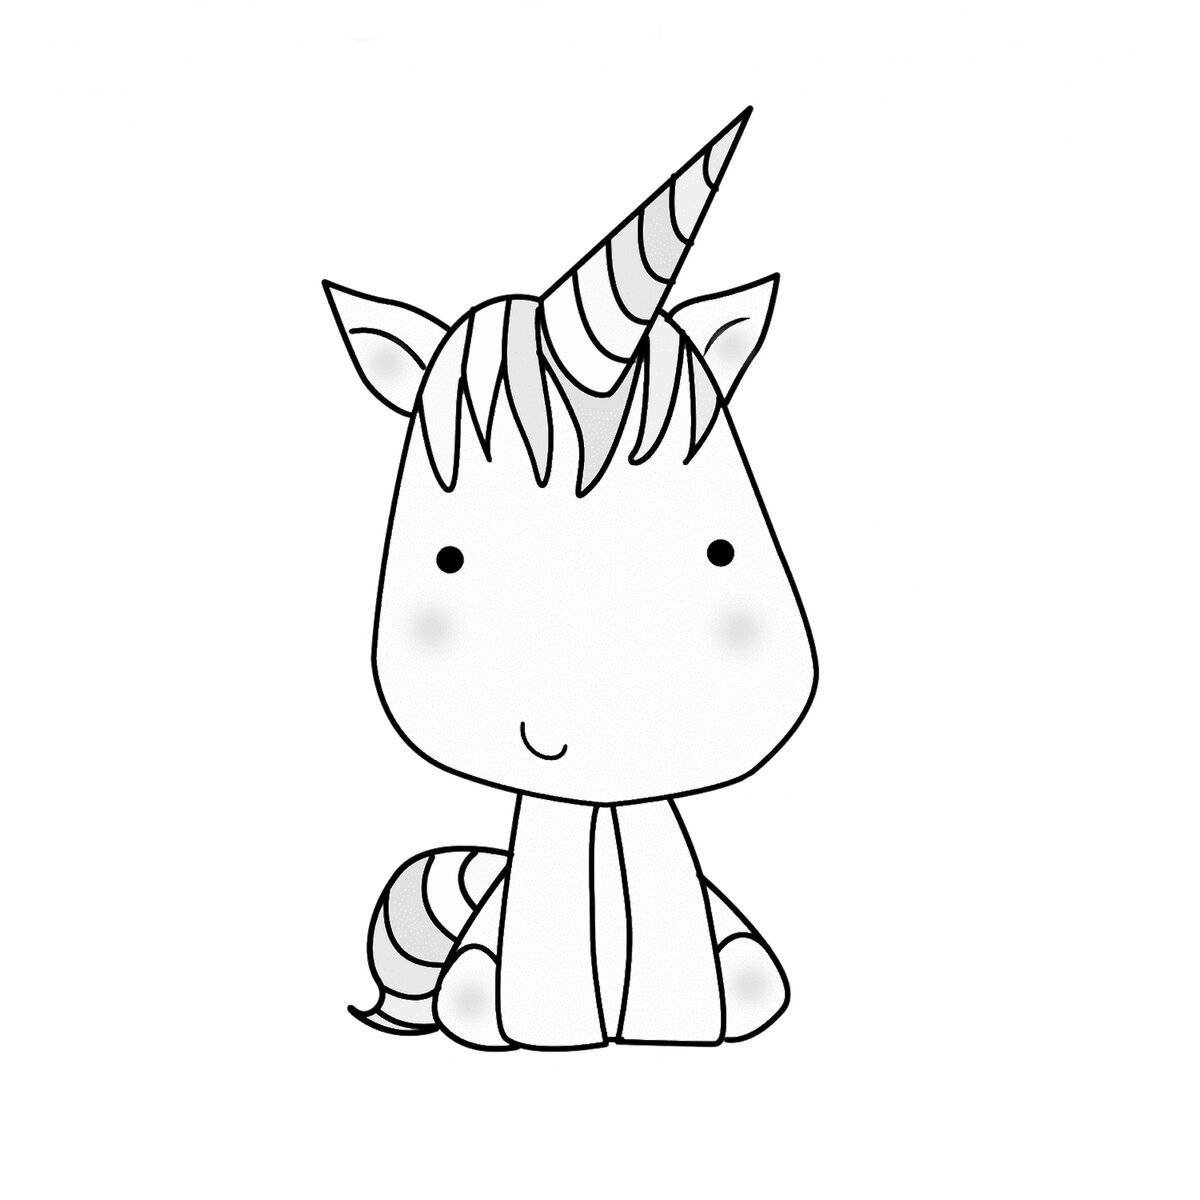 Amazing cute unicorn coloring book